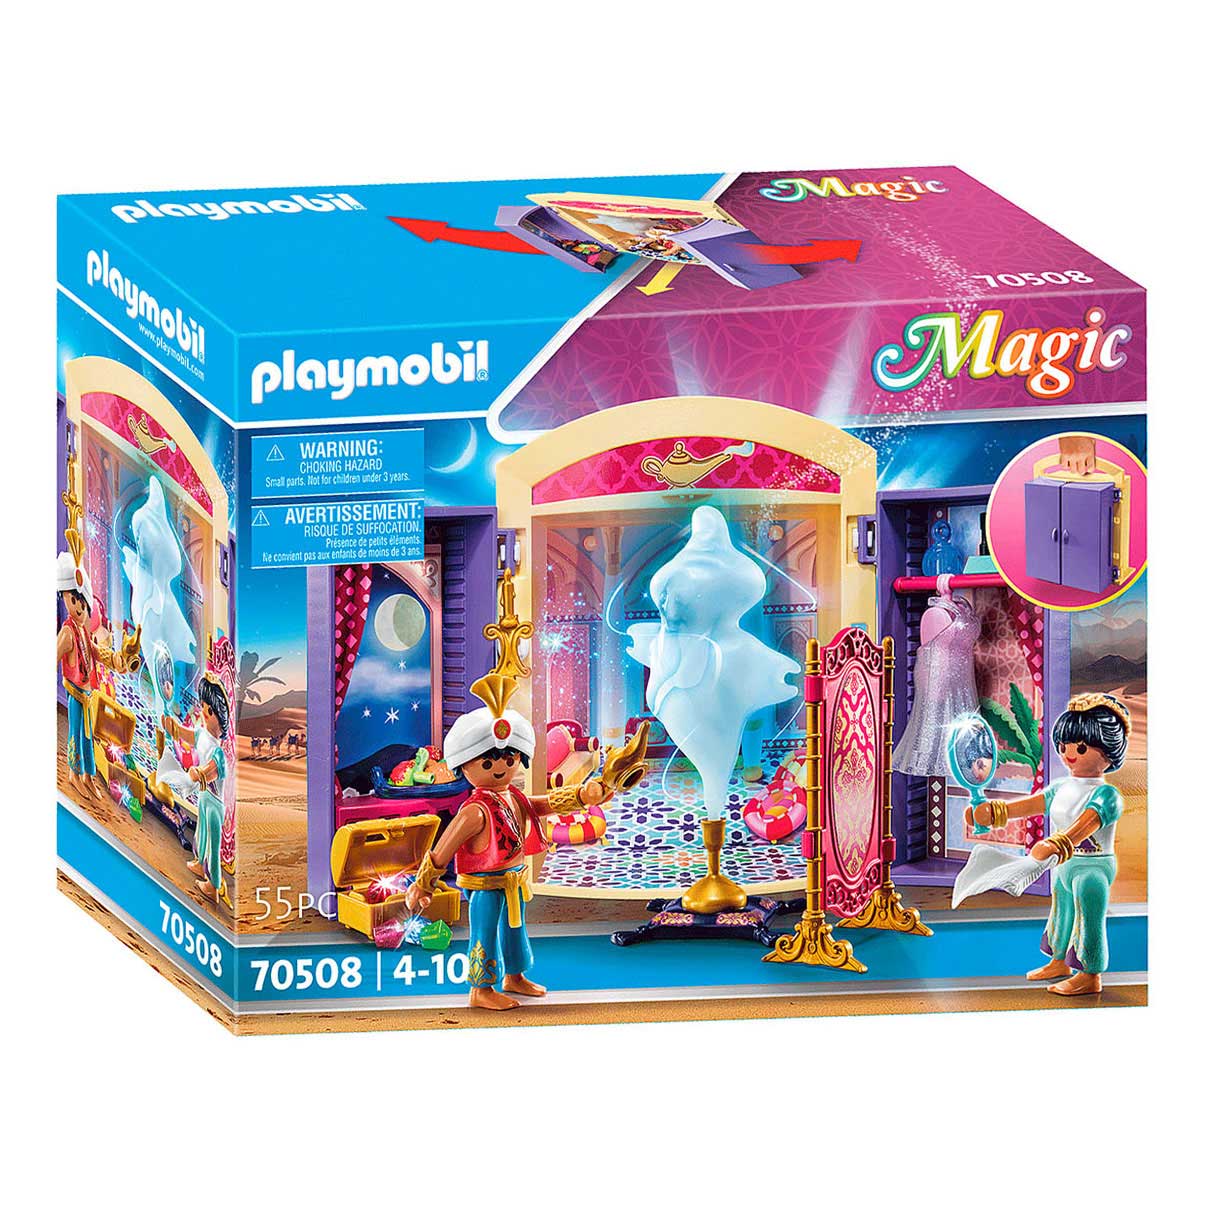 Klik Genre Ster Playmobil Magic Playbox Orient princess - 70508 | Thimble Toys